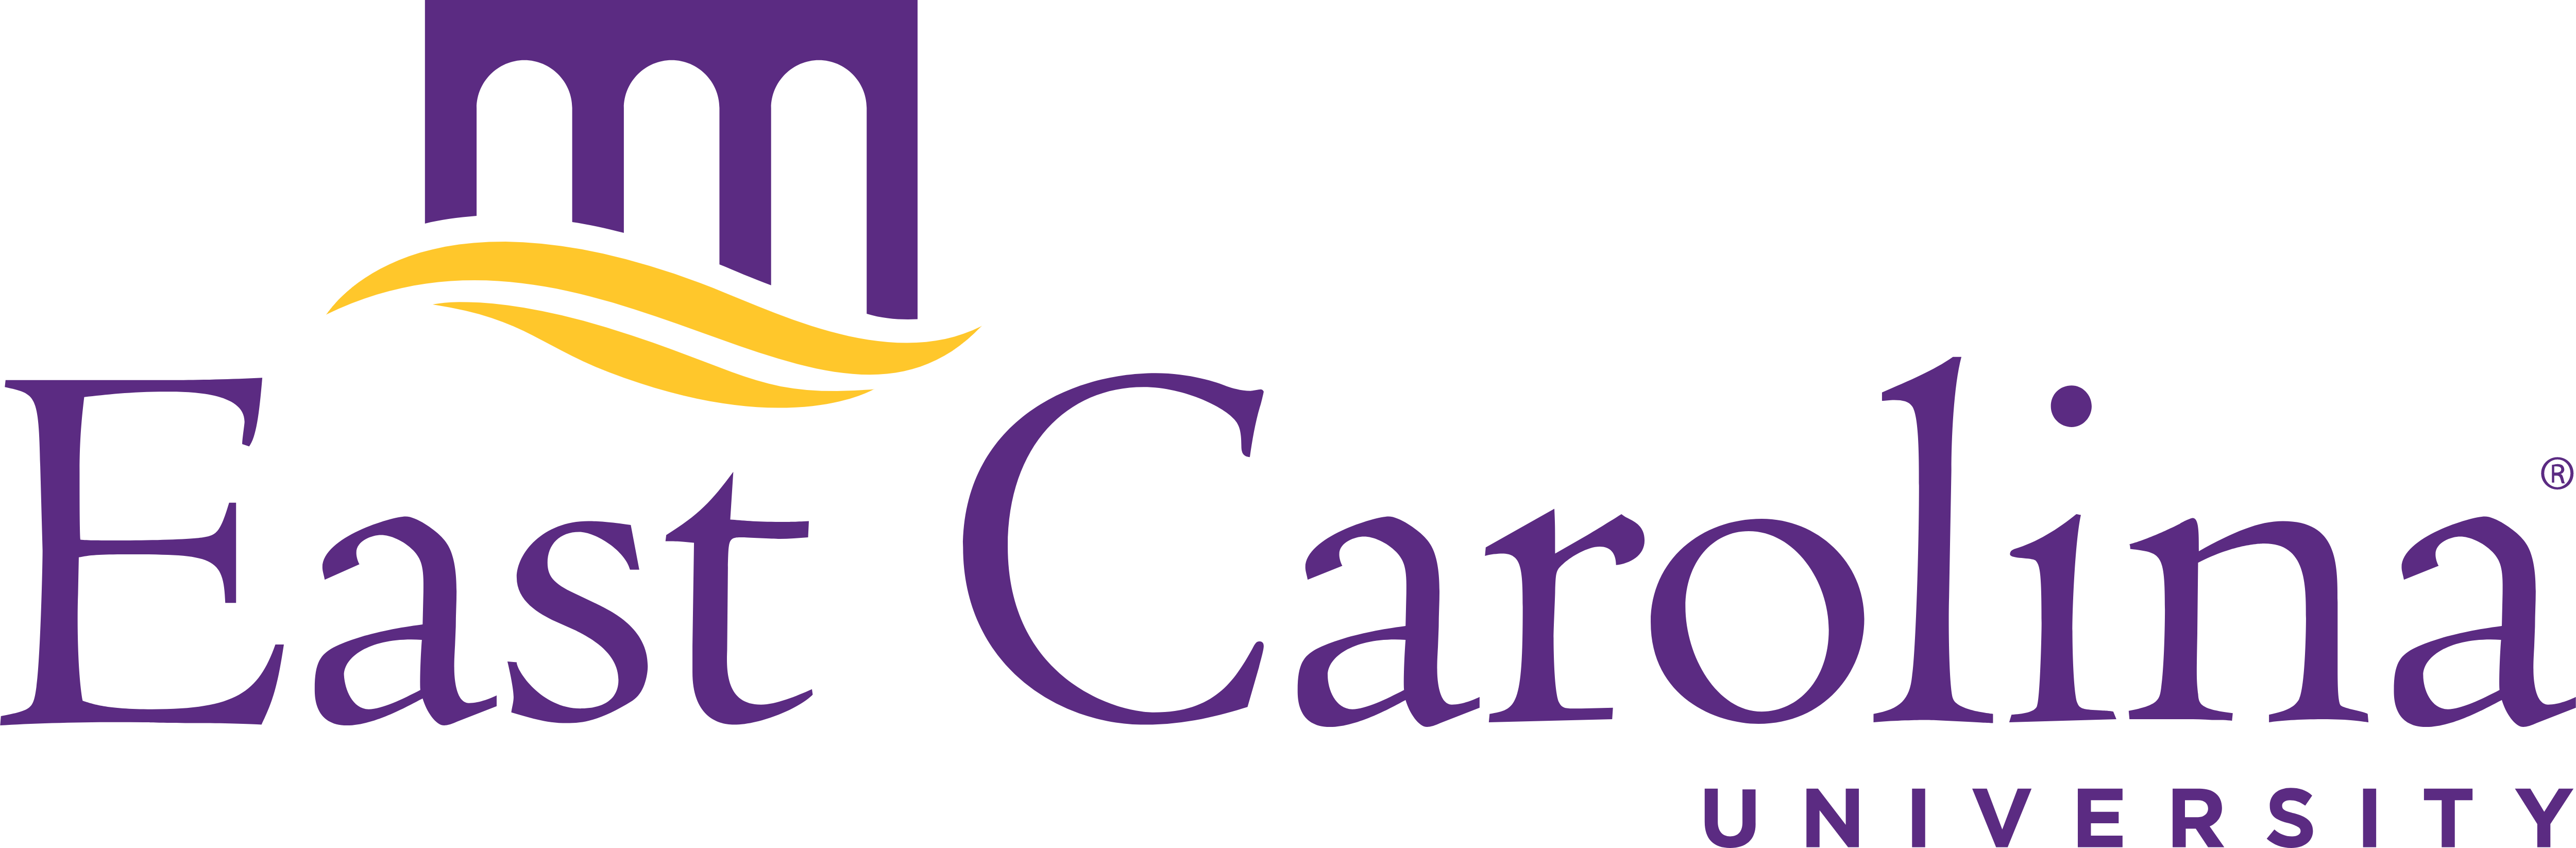 East Carolina University – Logos Download